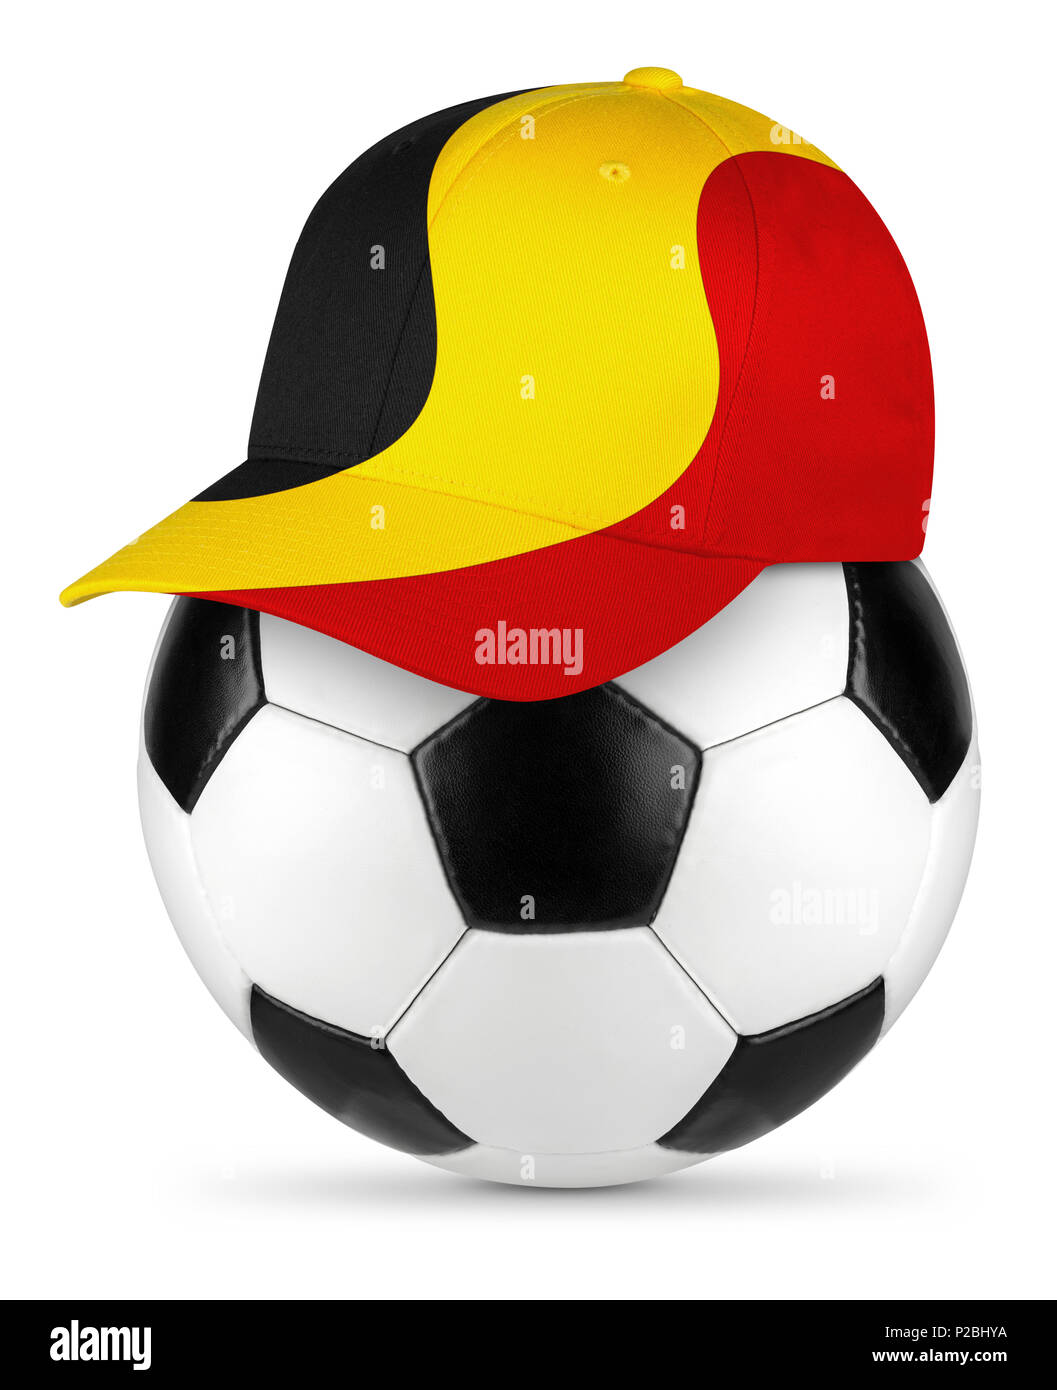 Classic black white leather soccer ball belgium belgian flag baseball fan cap isolated background sport football concept Stock Photo